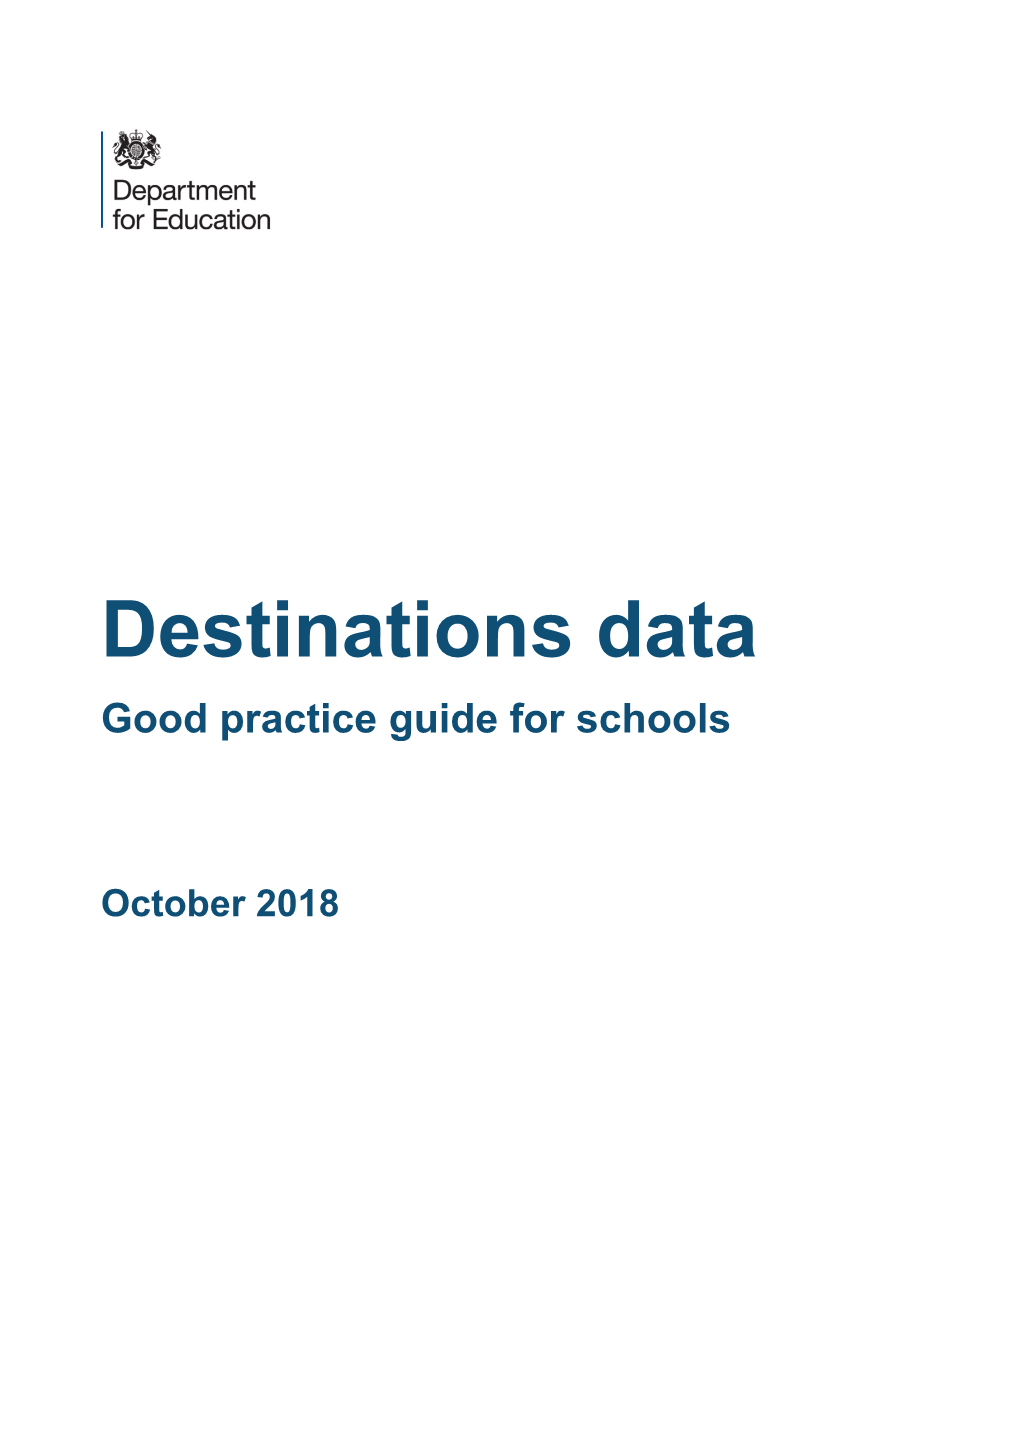 Destinations Data: Good Practice Guide for Schools